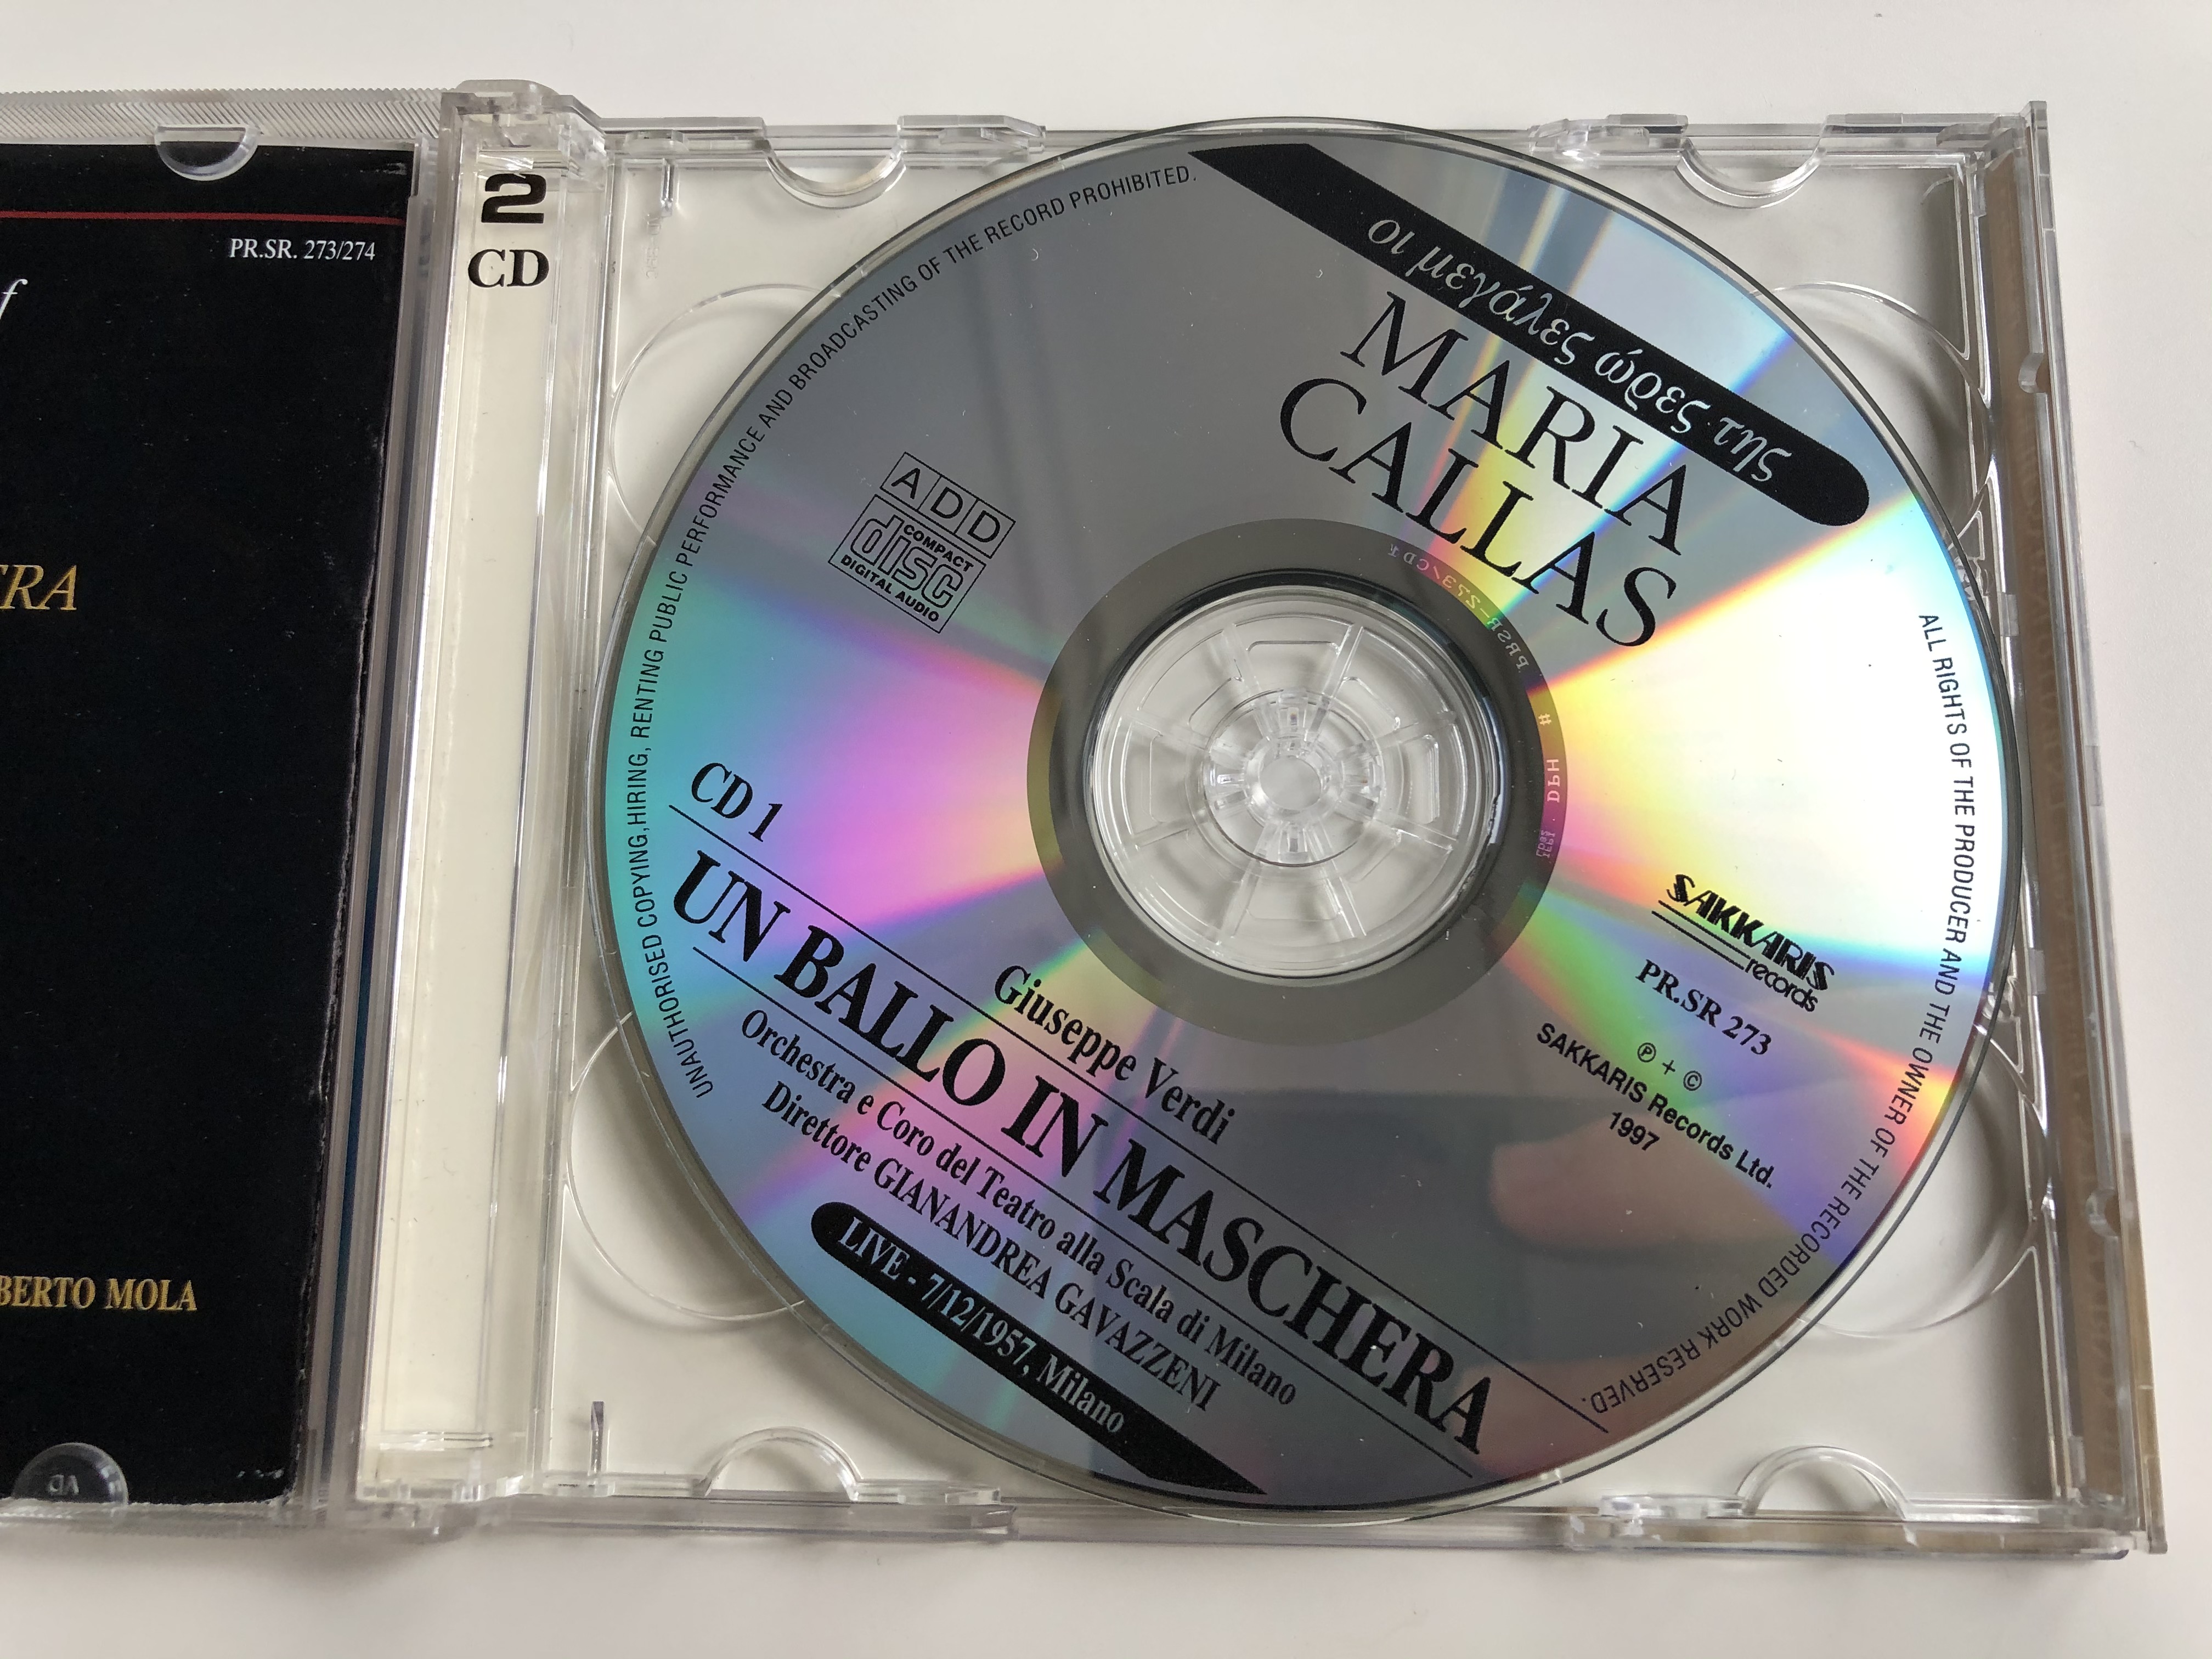 the-greatest-years-of-maria-callas-giuseppe-verdi-un-ballo-in-maschera-direttore-gianandrea-gavazzeni-scala-1957-sakkaris-records-audio-cd-pr.sr.-273274-6-.jpg